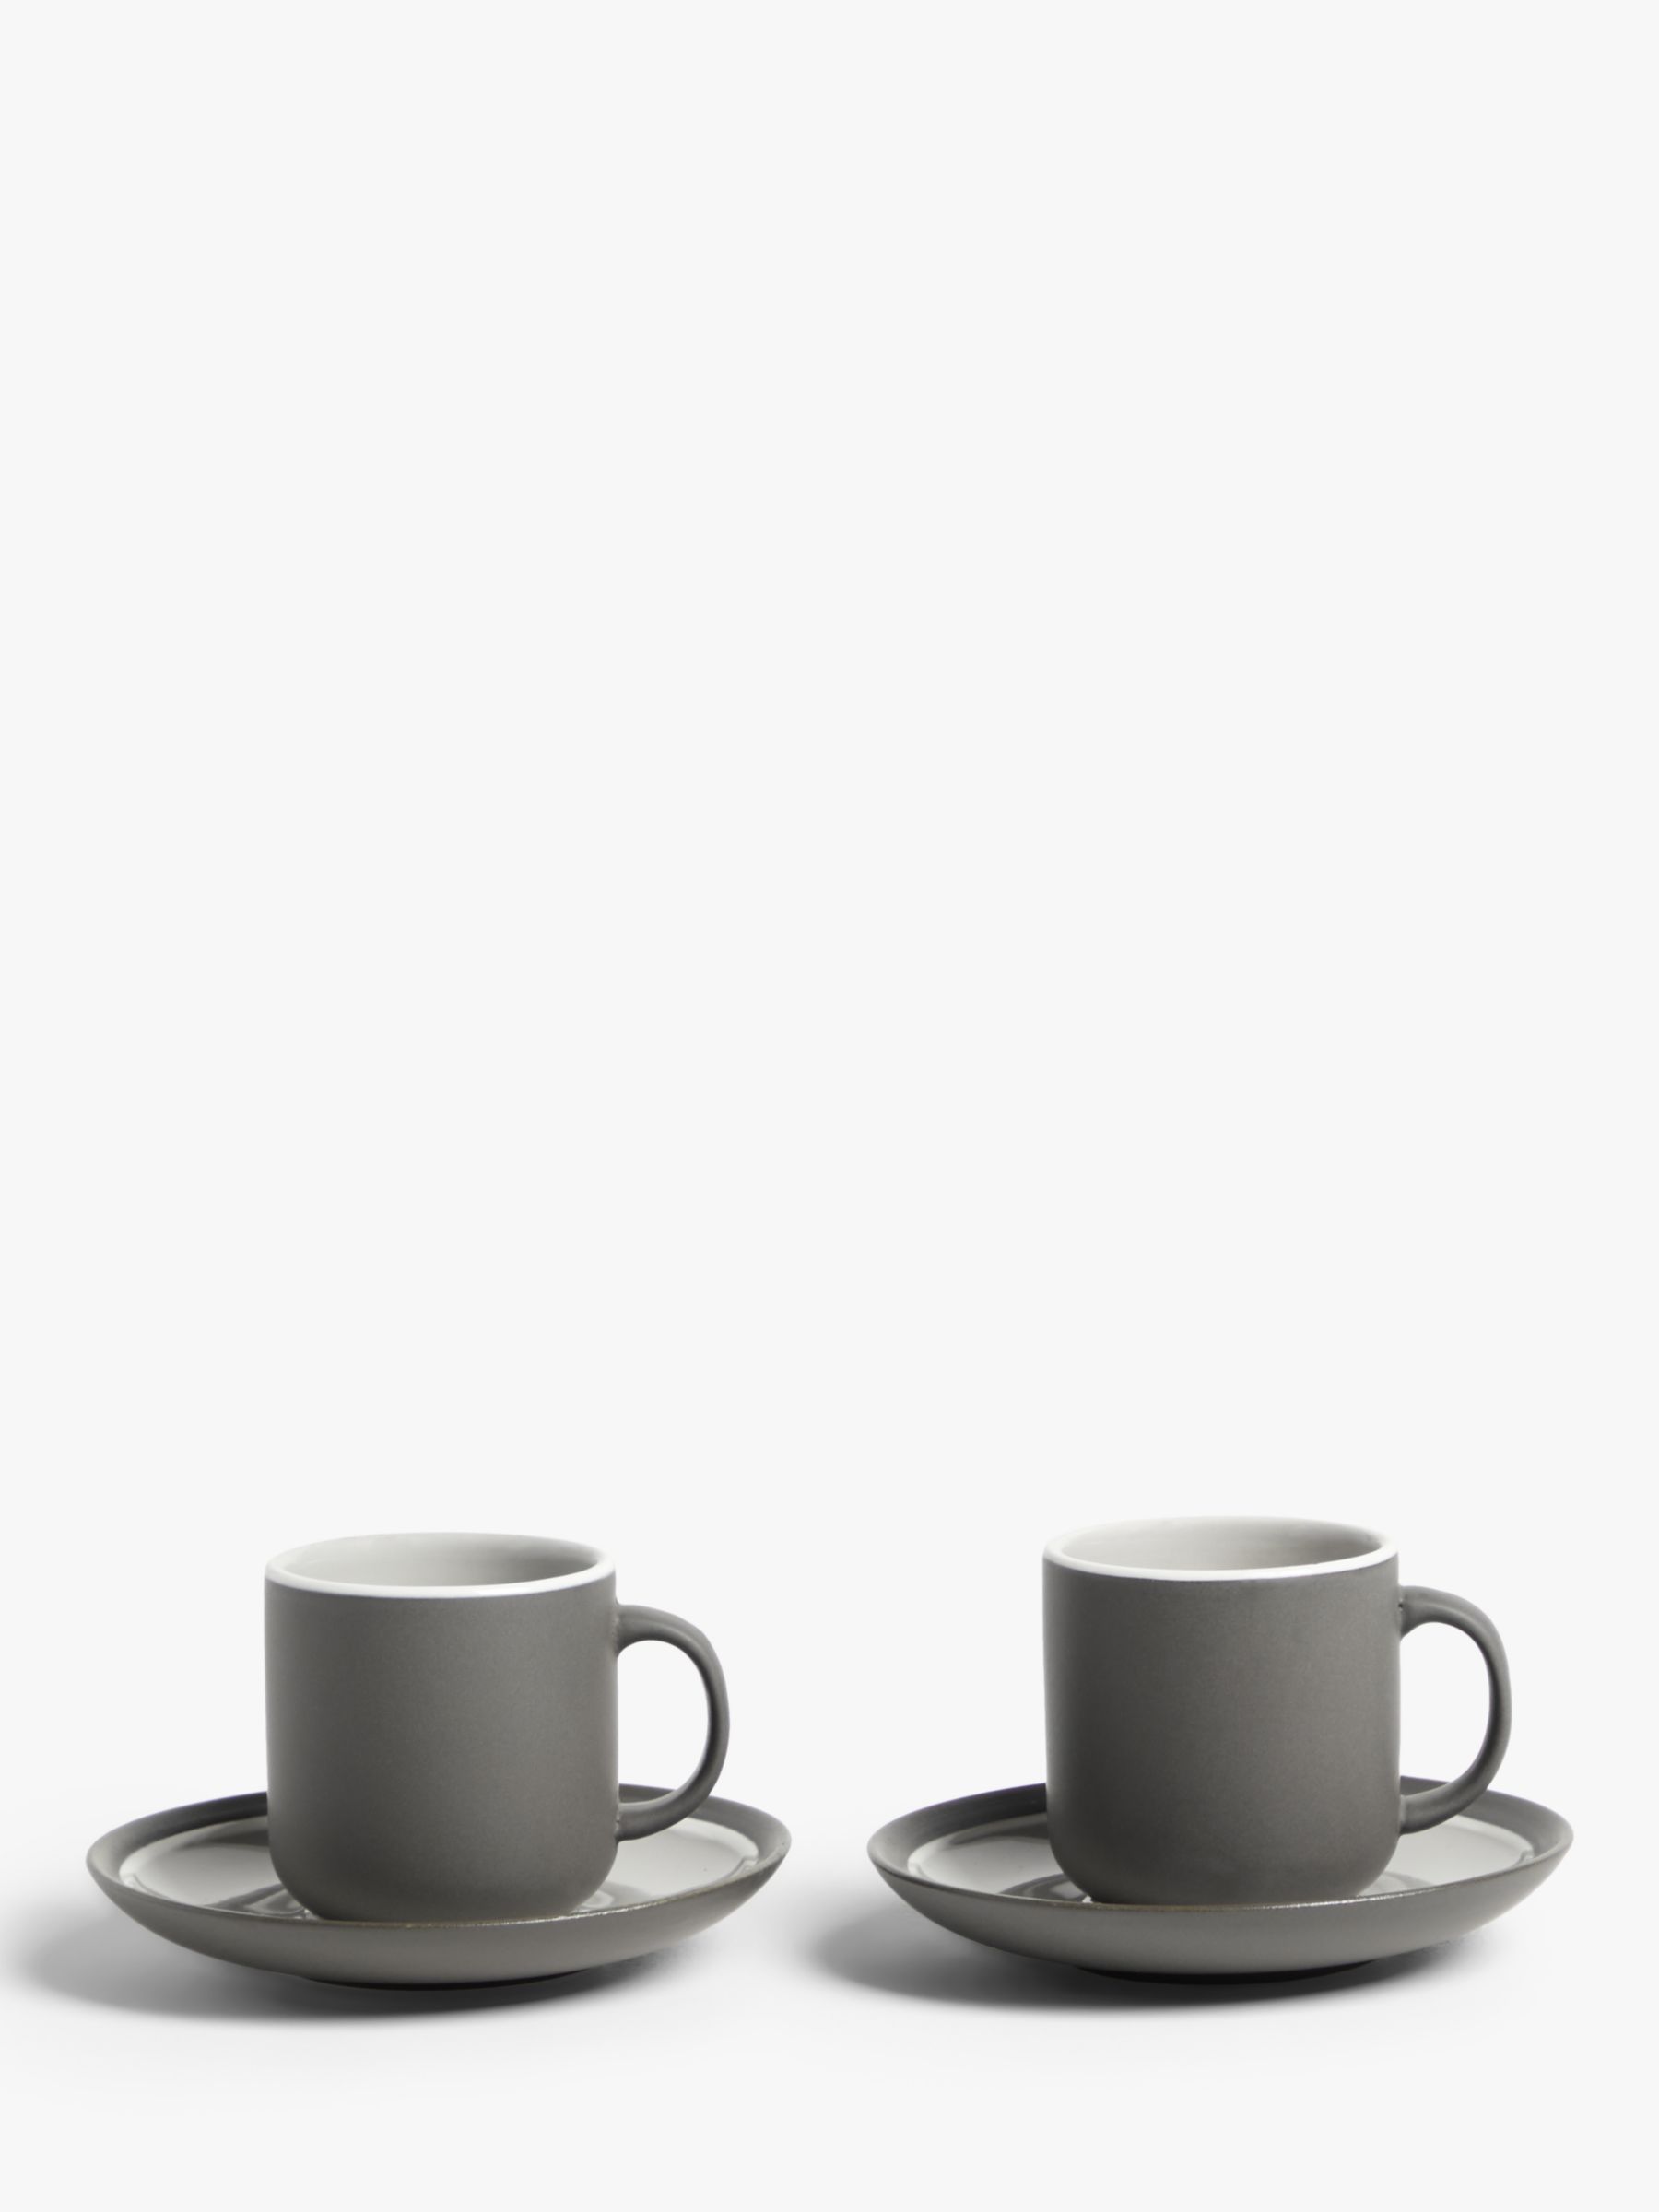 John Lewis & Partners Puritan Espresso Cup & Saucer, Set of 2, 90ml, Dark Grey